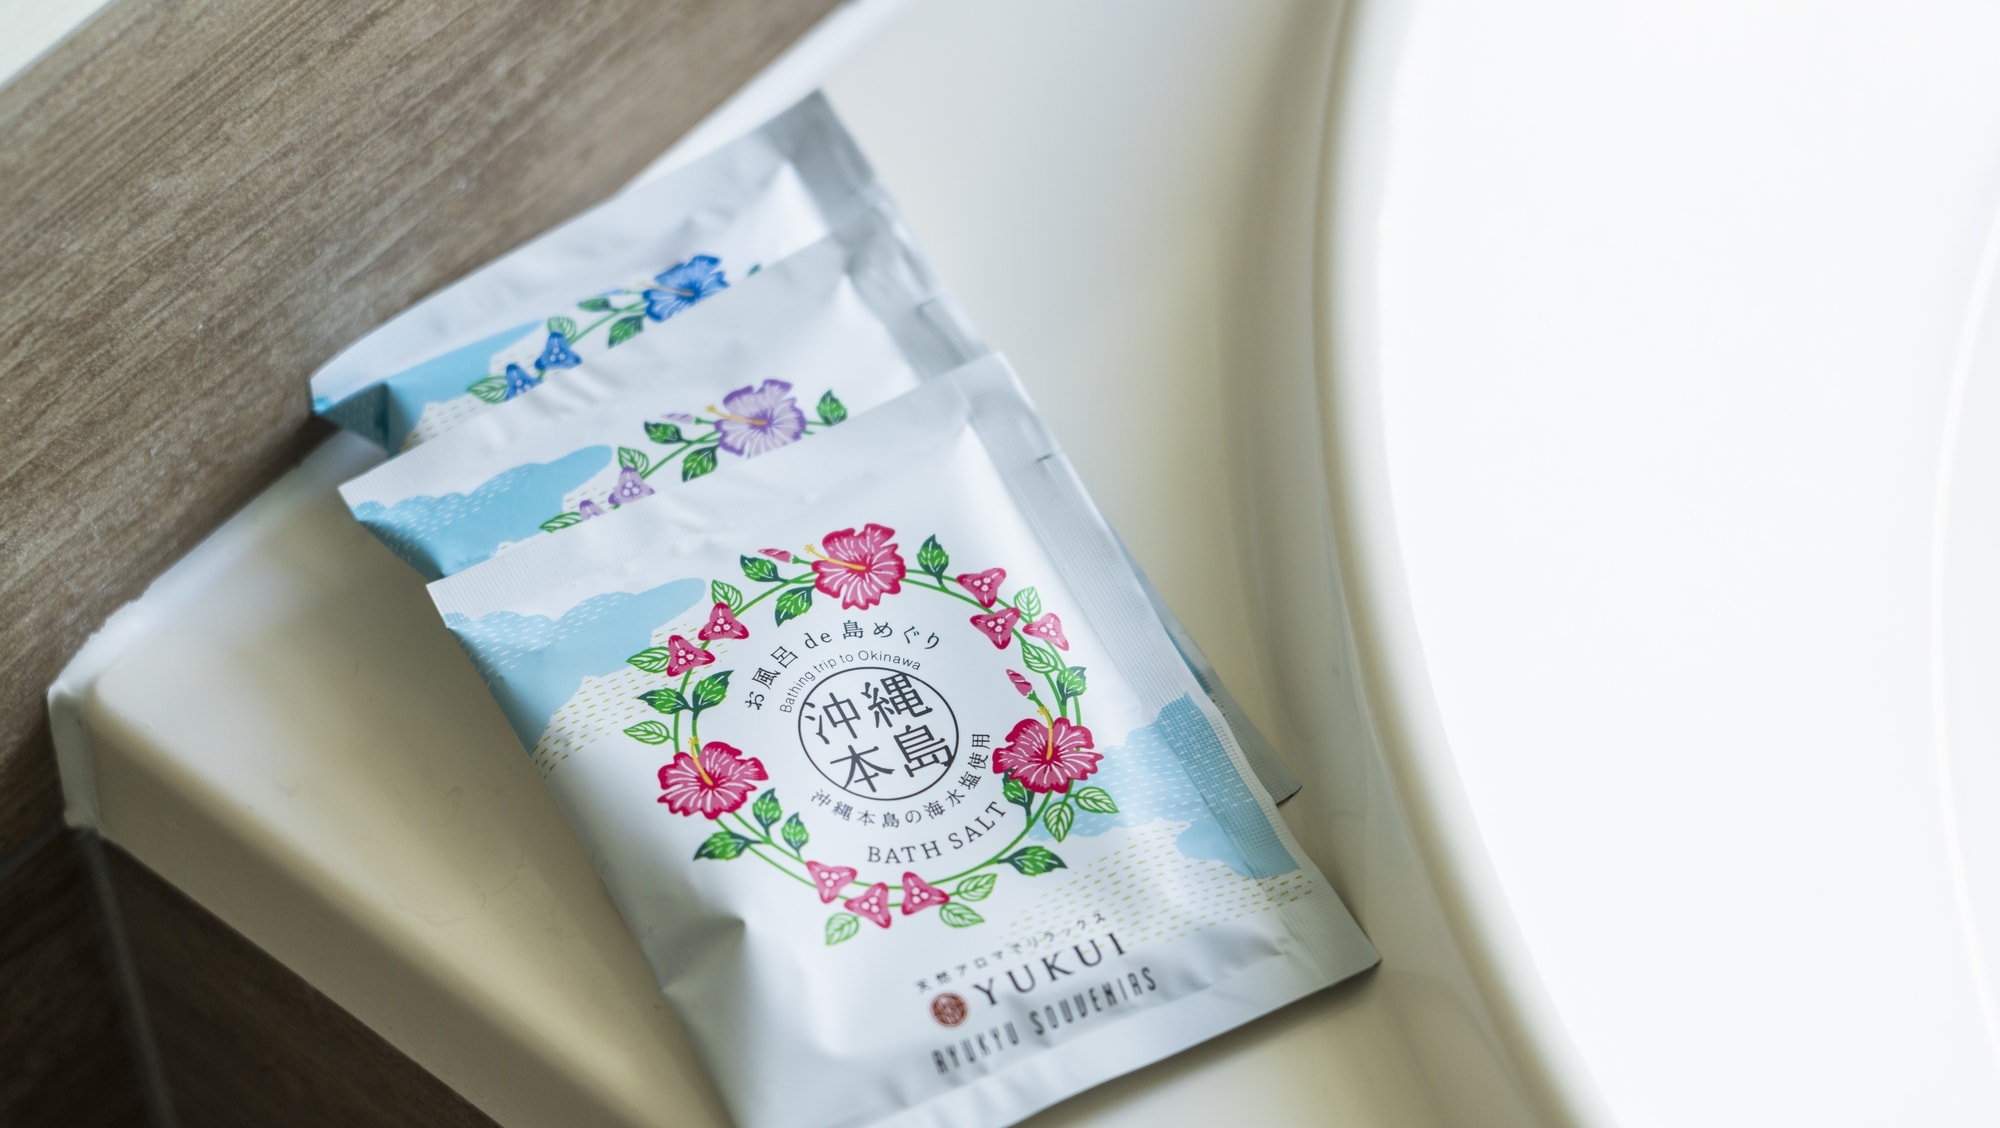 Premier floor limited benefits: Salt-based bath salts from the islands of Okinawa.